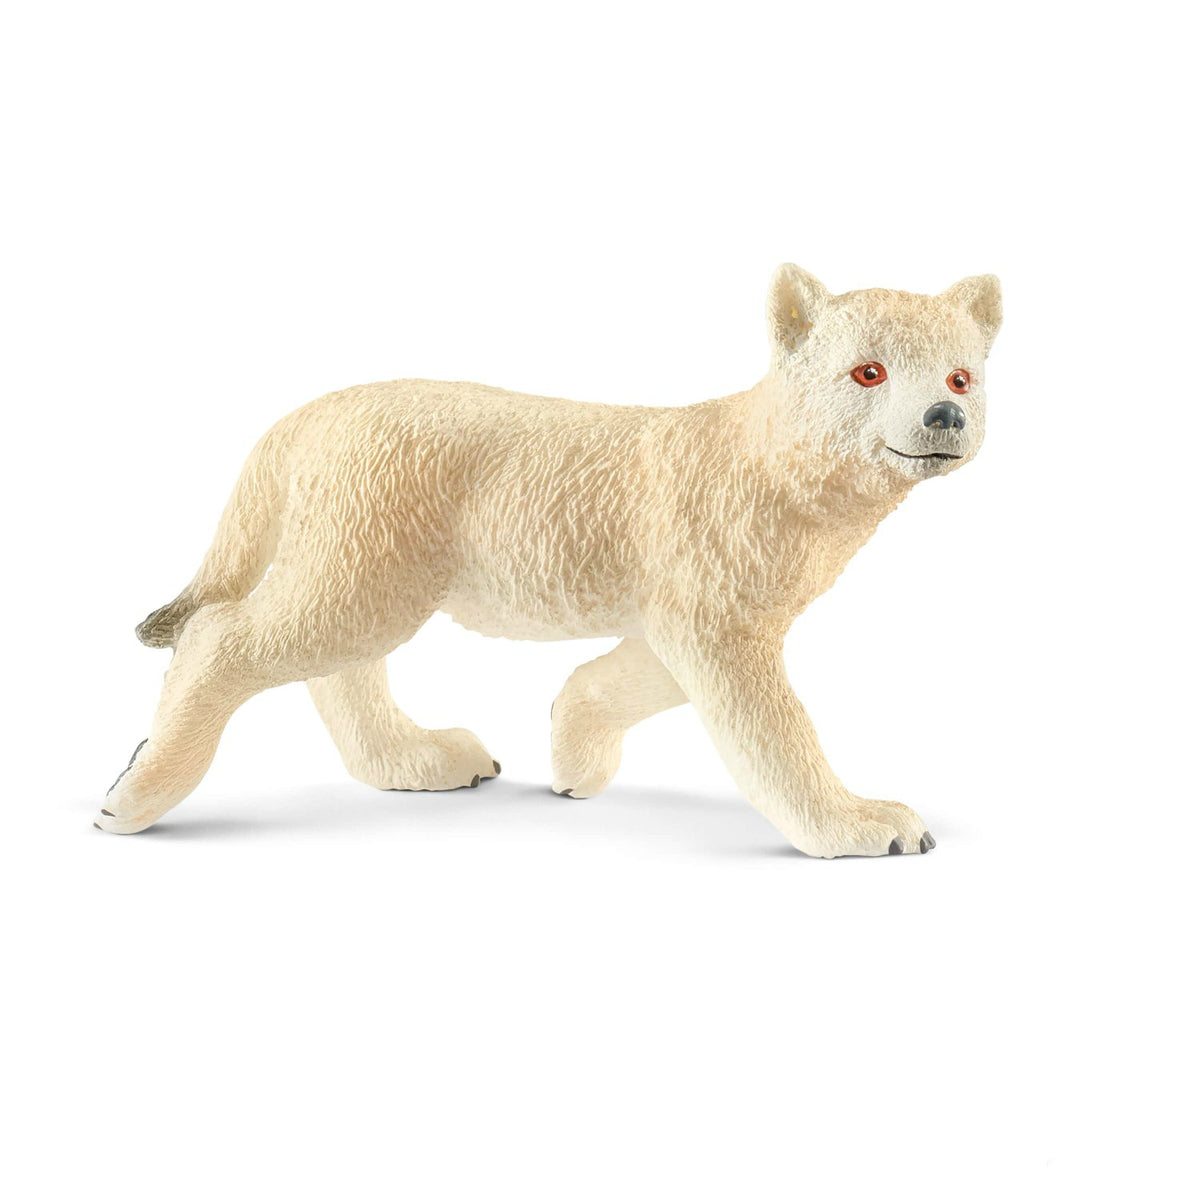 Schleich 14804 Figurine Arctic Wolf Cub Toy